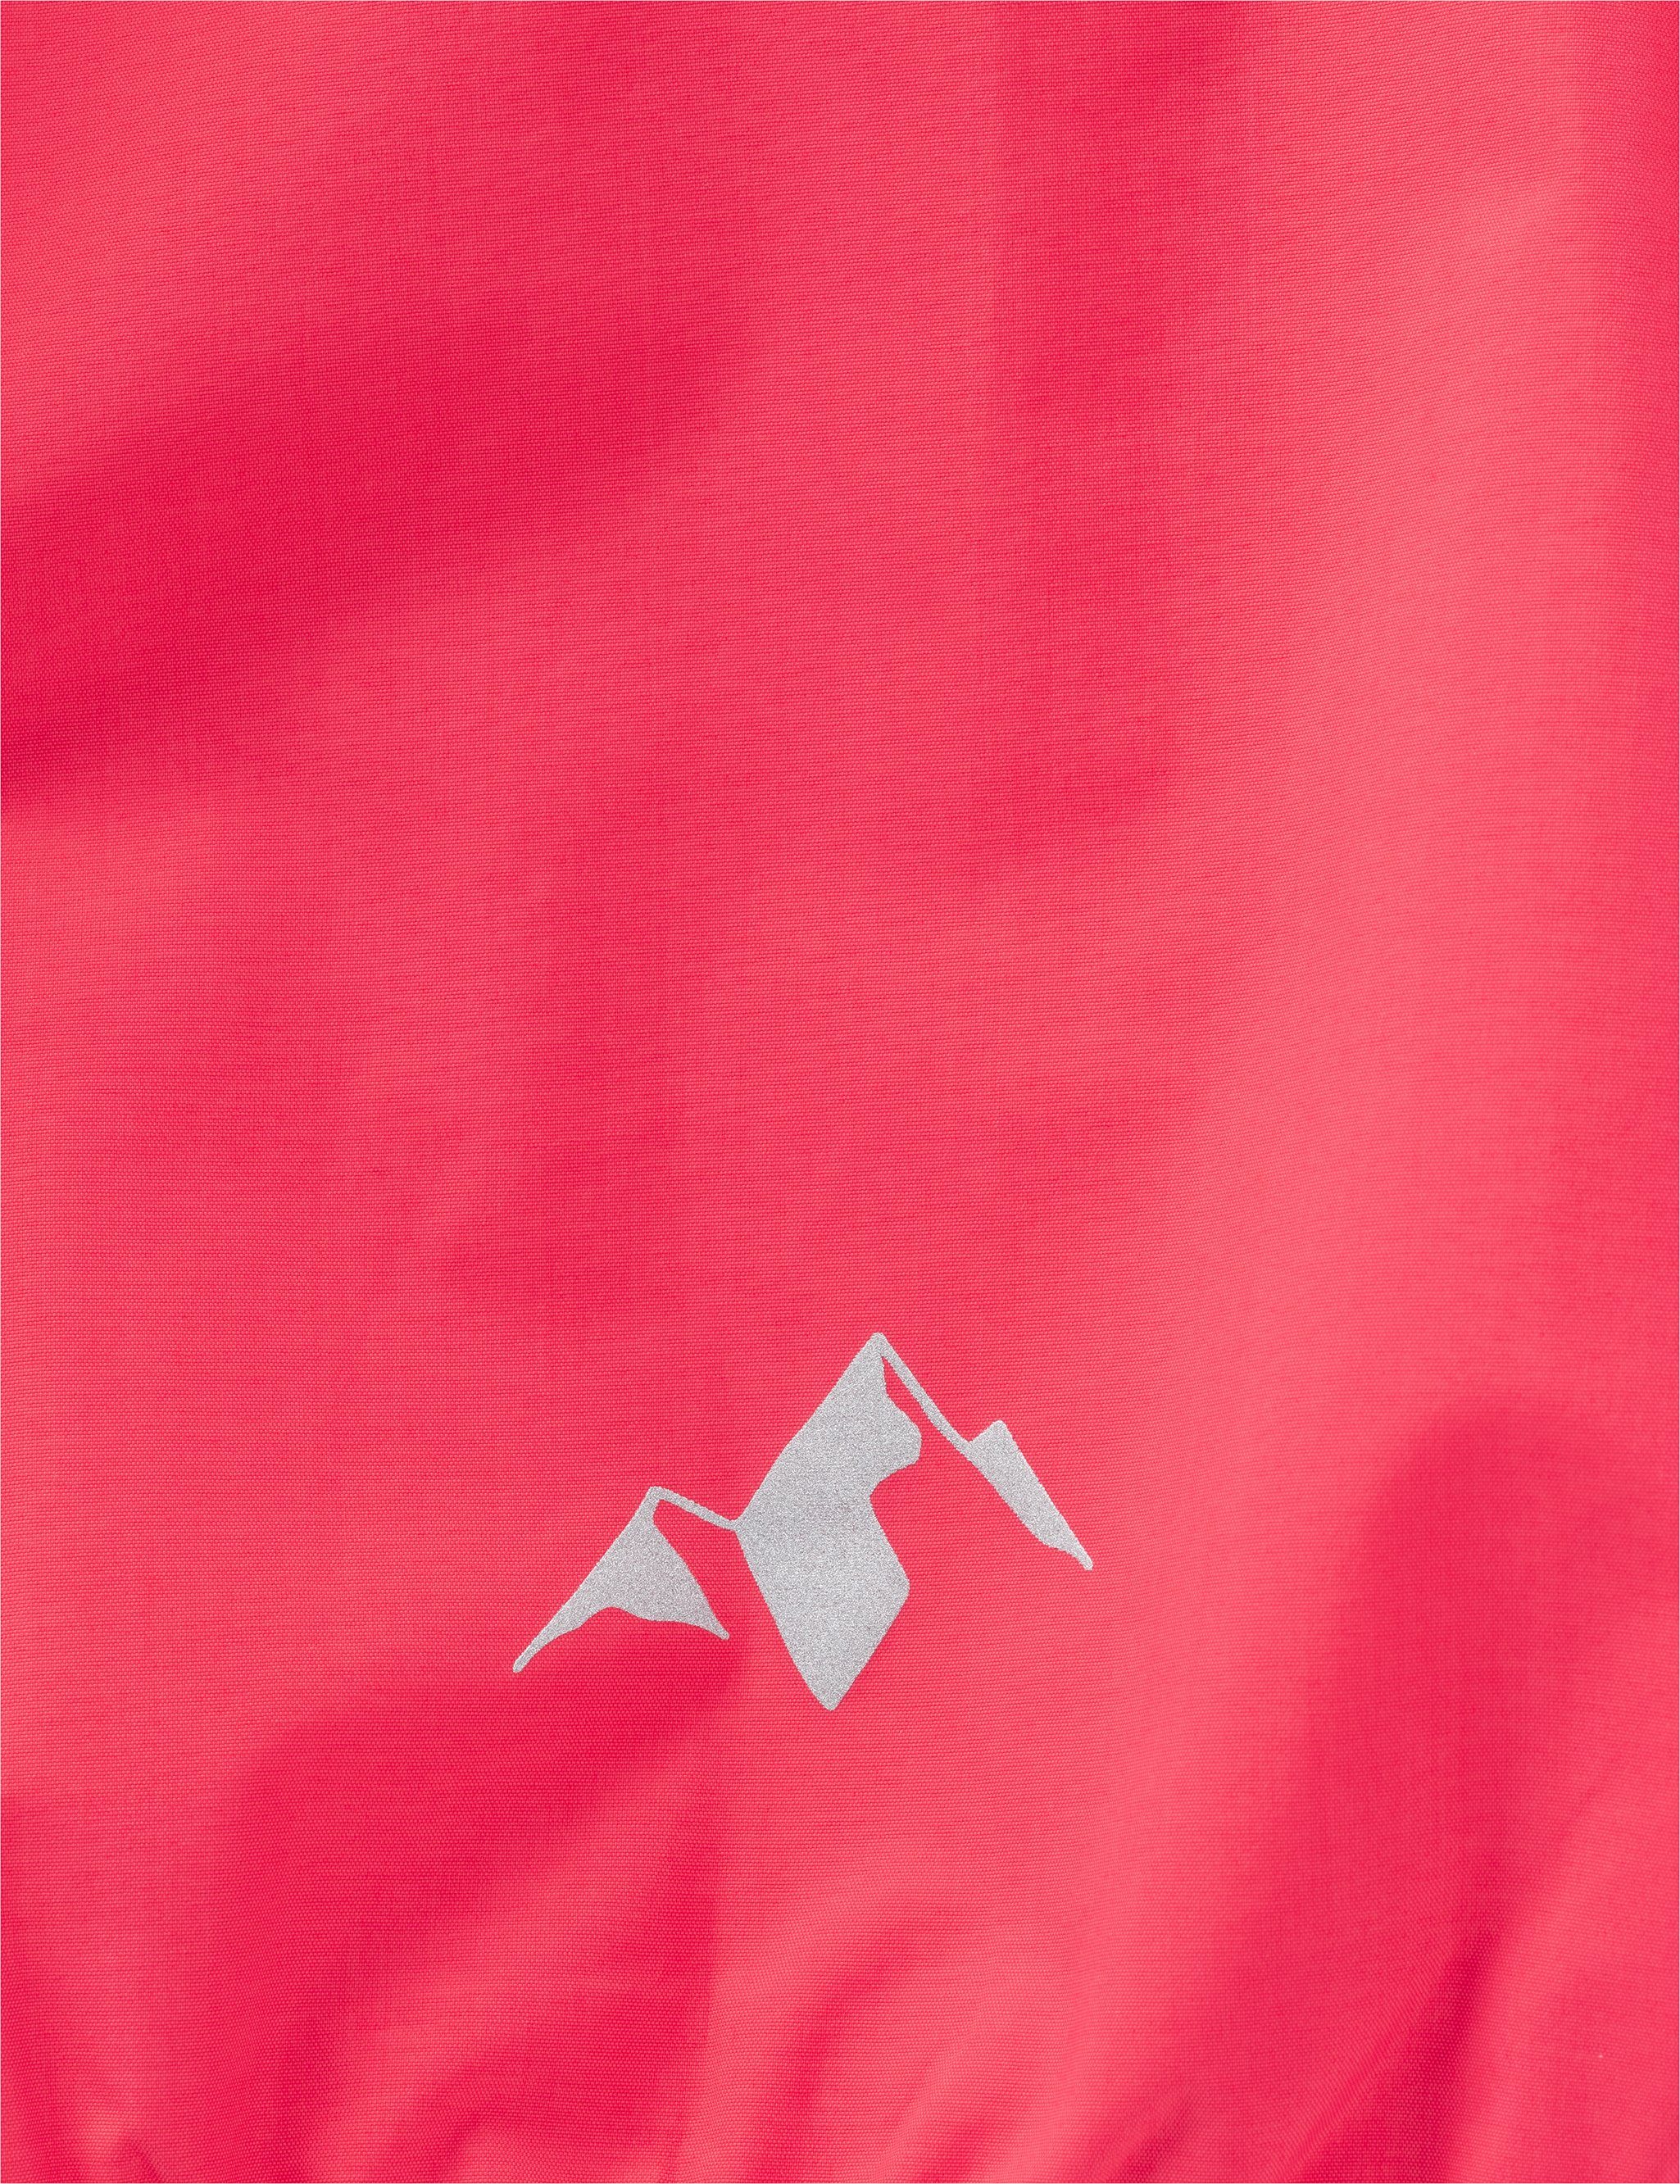 II VAUDE Turaco bright (1-St) Klimaneutral pink/orange Jacket Outdoorjacke Kids kompensiert